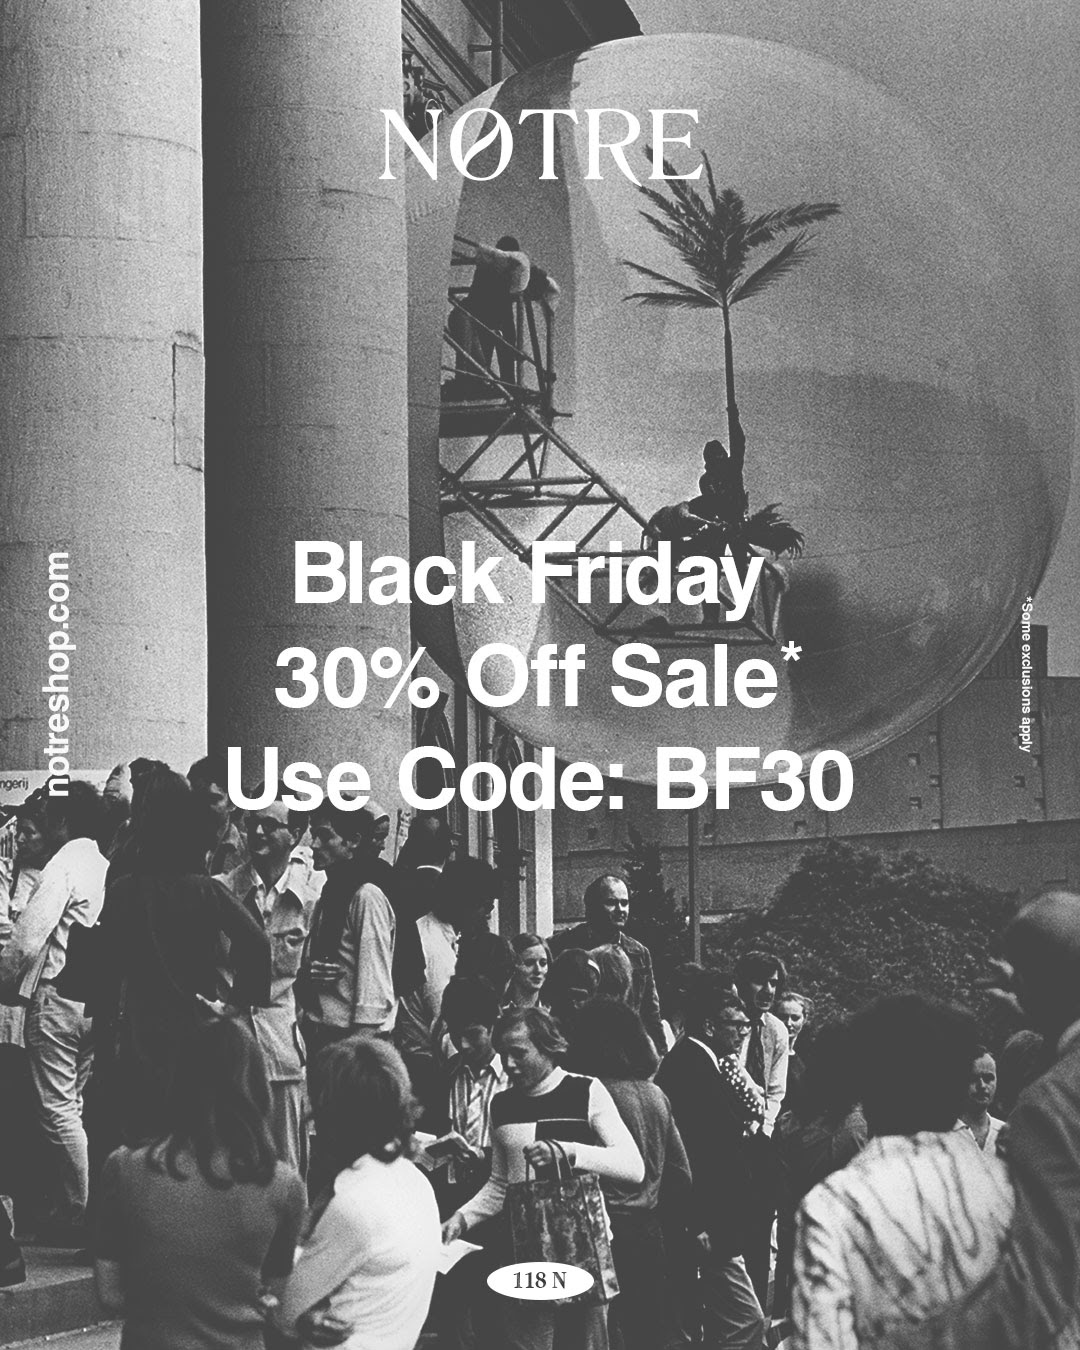 Notre Shop Black Friday Sale 2017